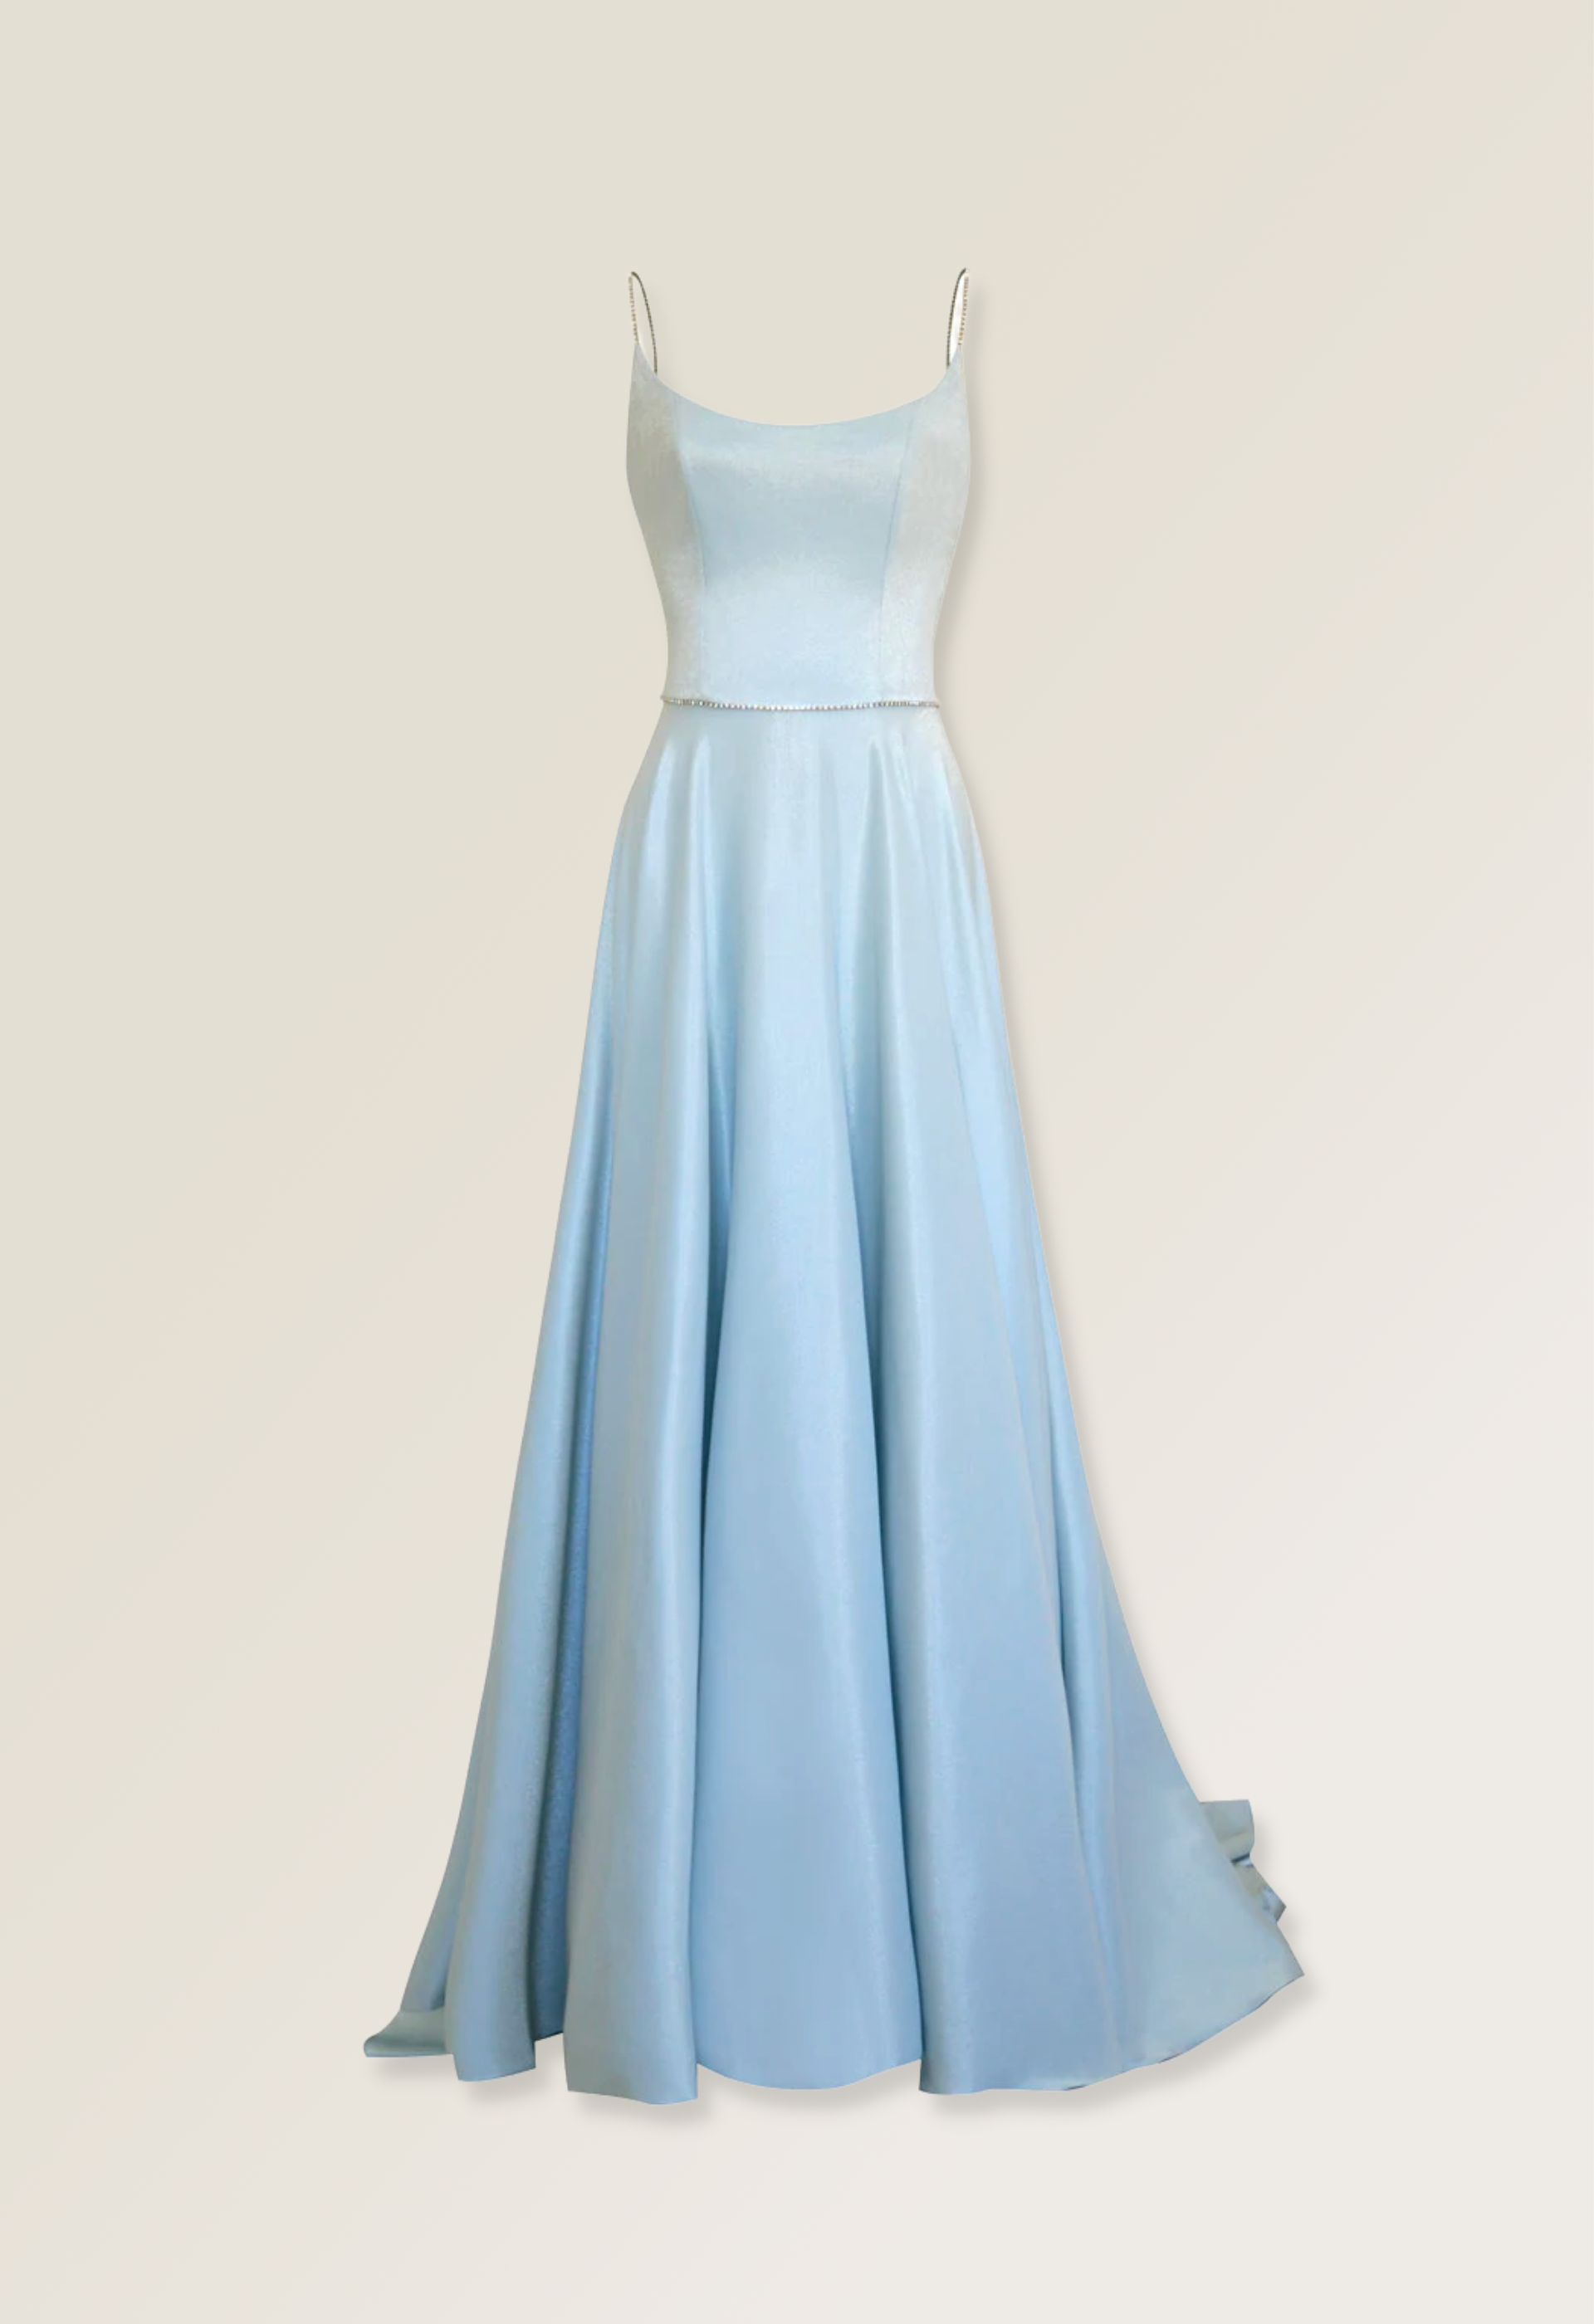 Metallic blue gown